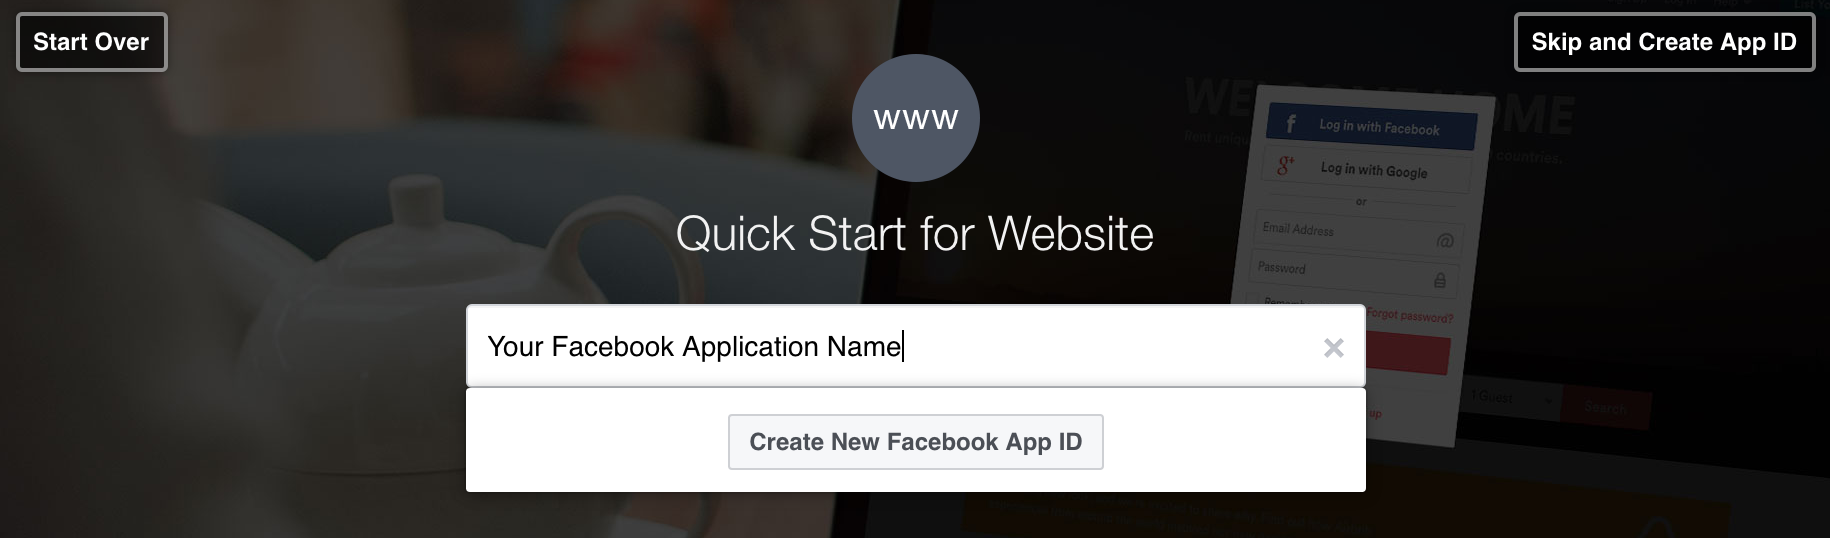 create an application name